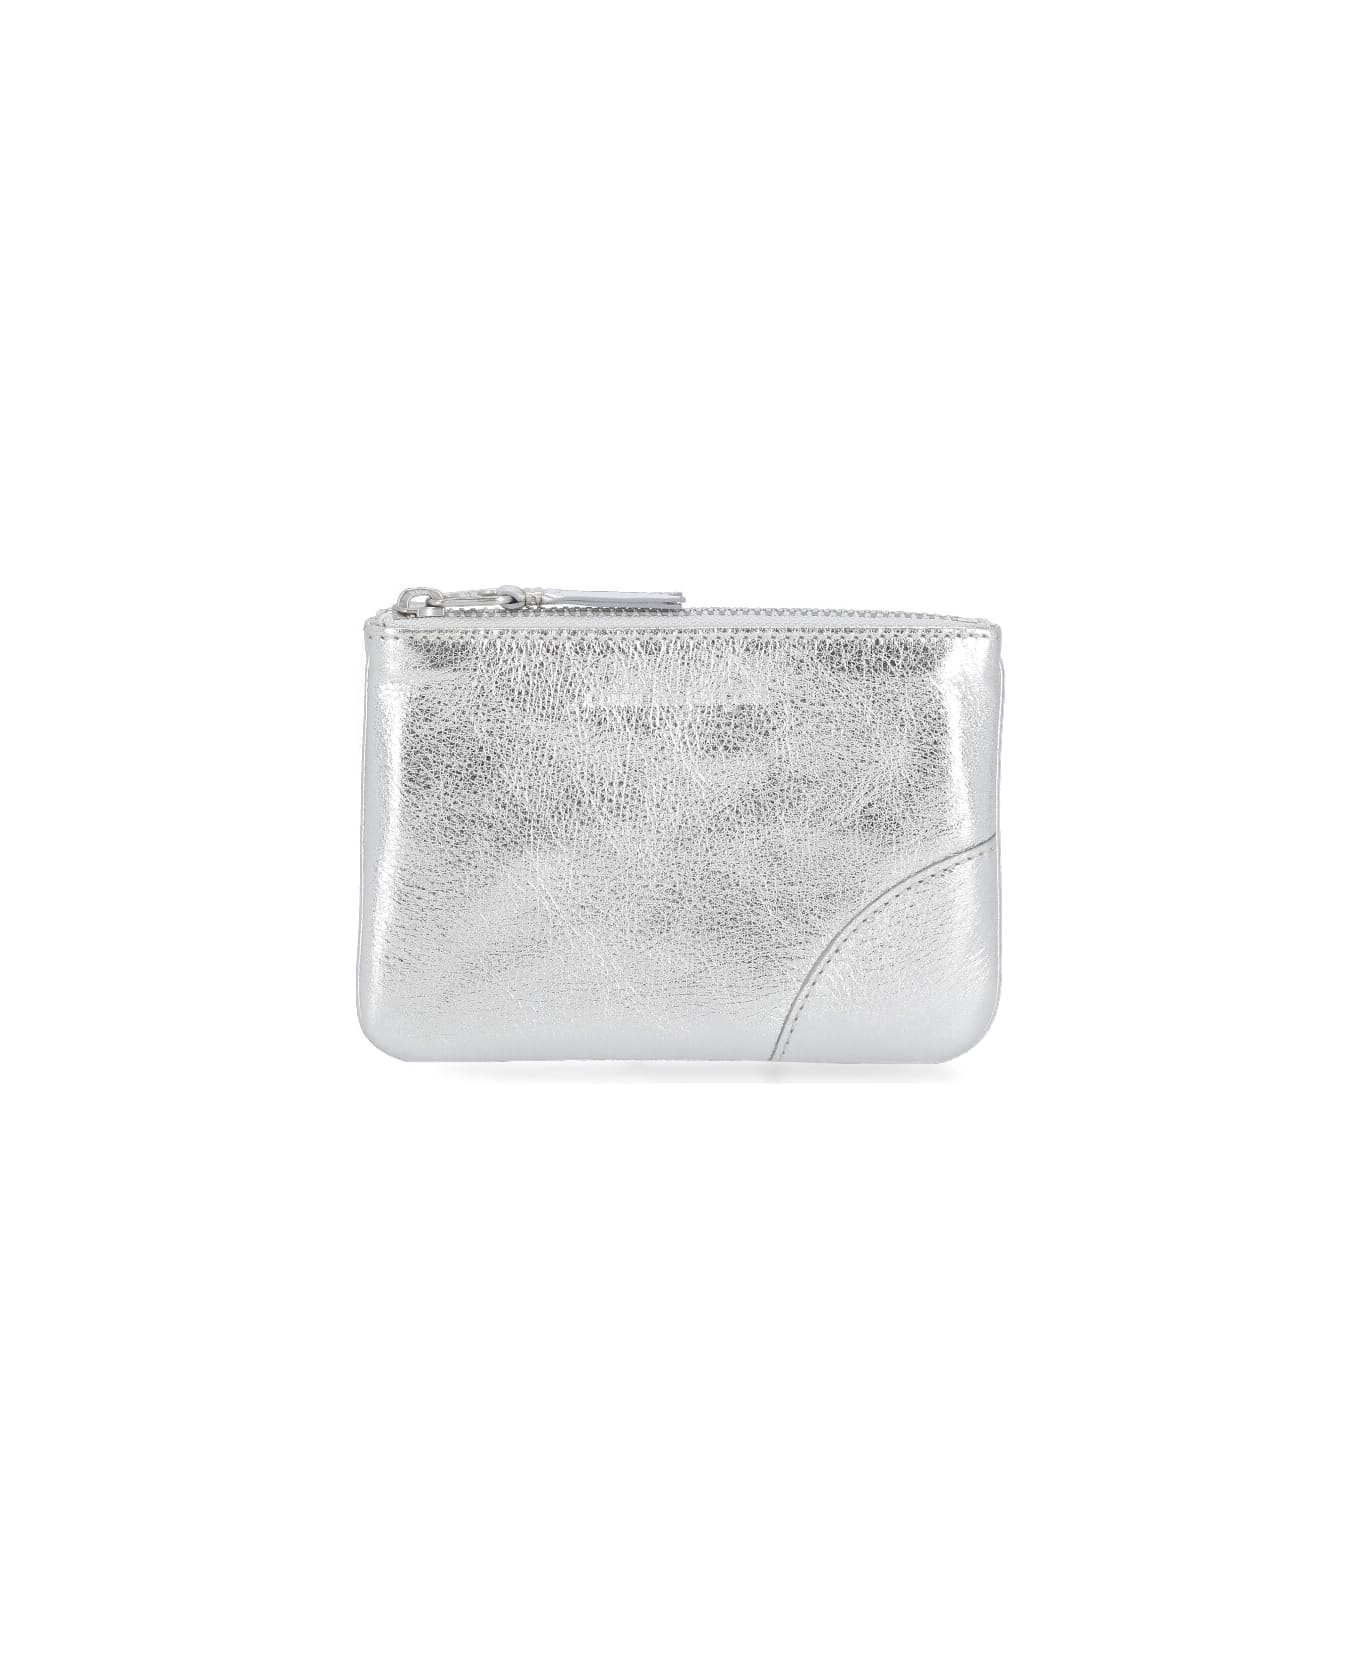 Comme des Garçons Wallet Wallet With Logo - Silver